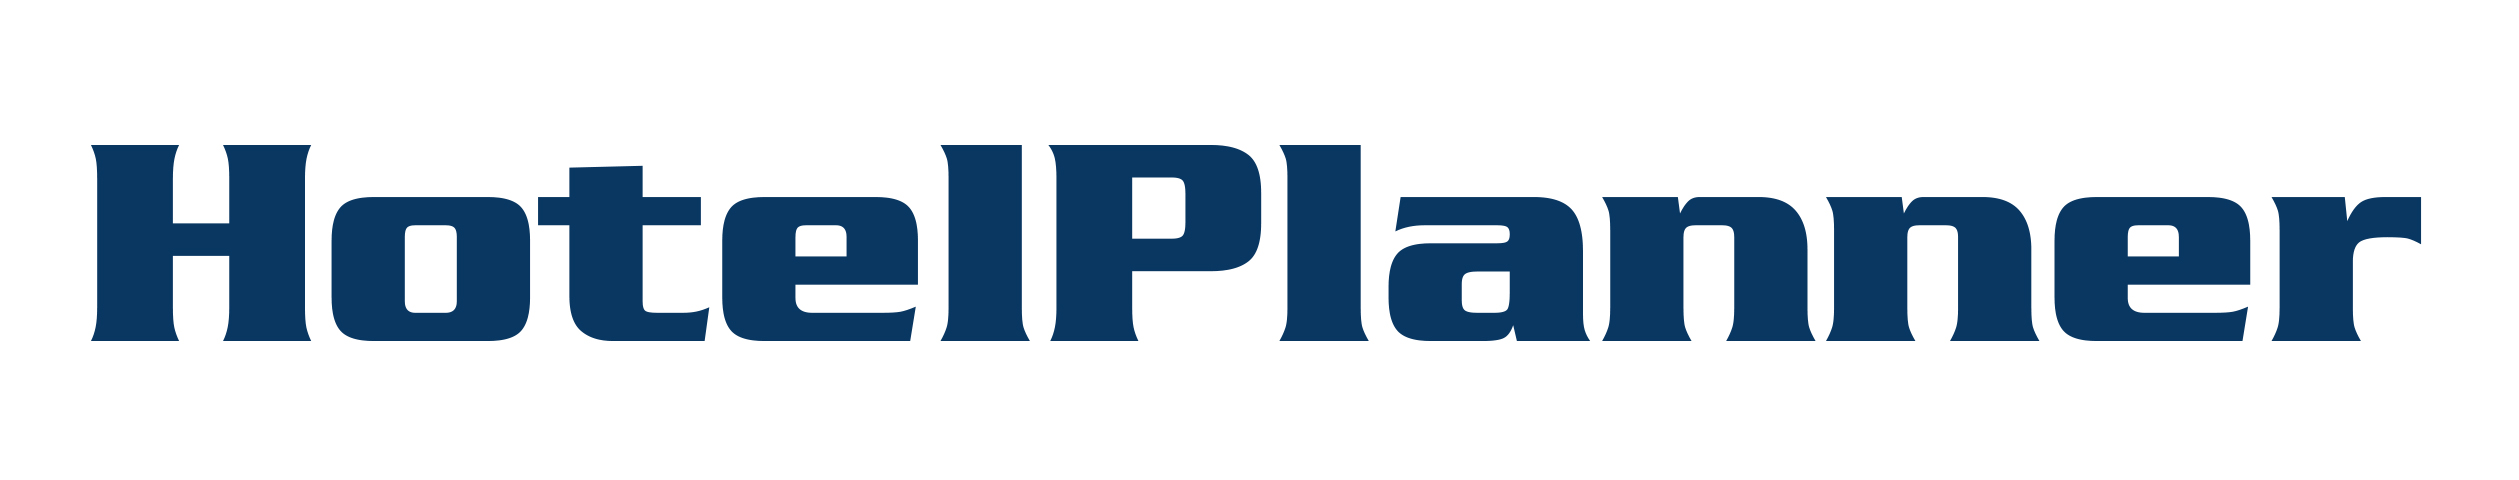 hotelplanner 2020 logo